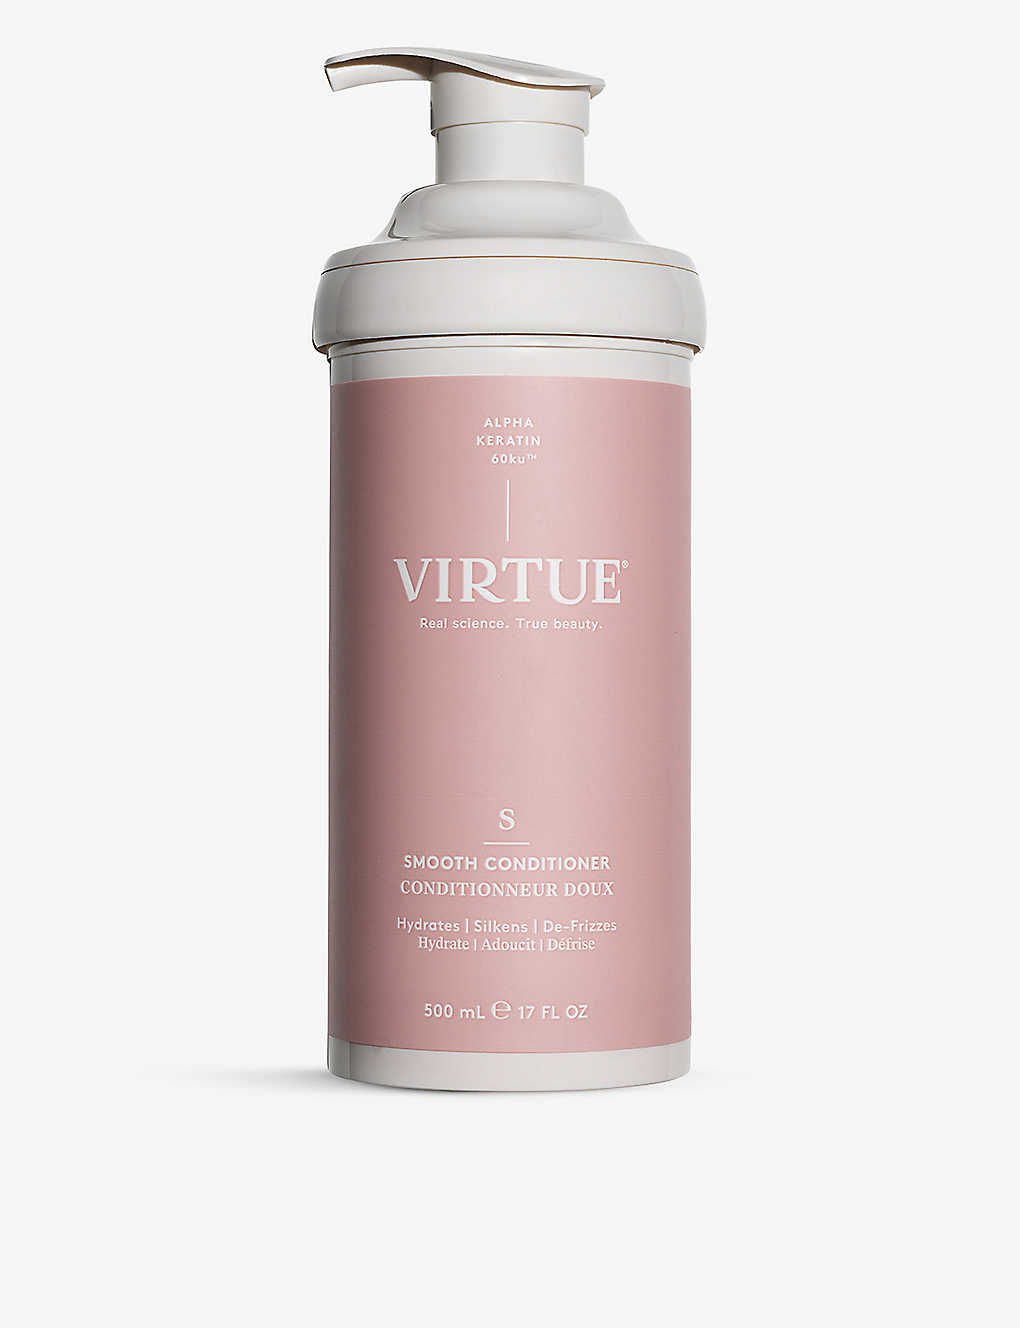 Virtue Smooth Conditioner